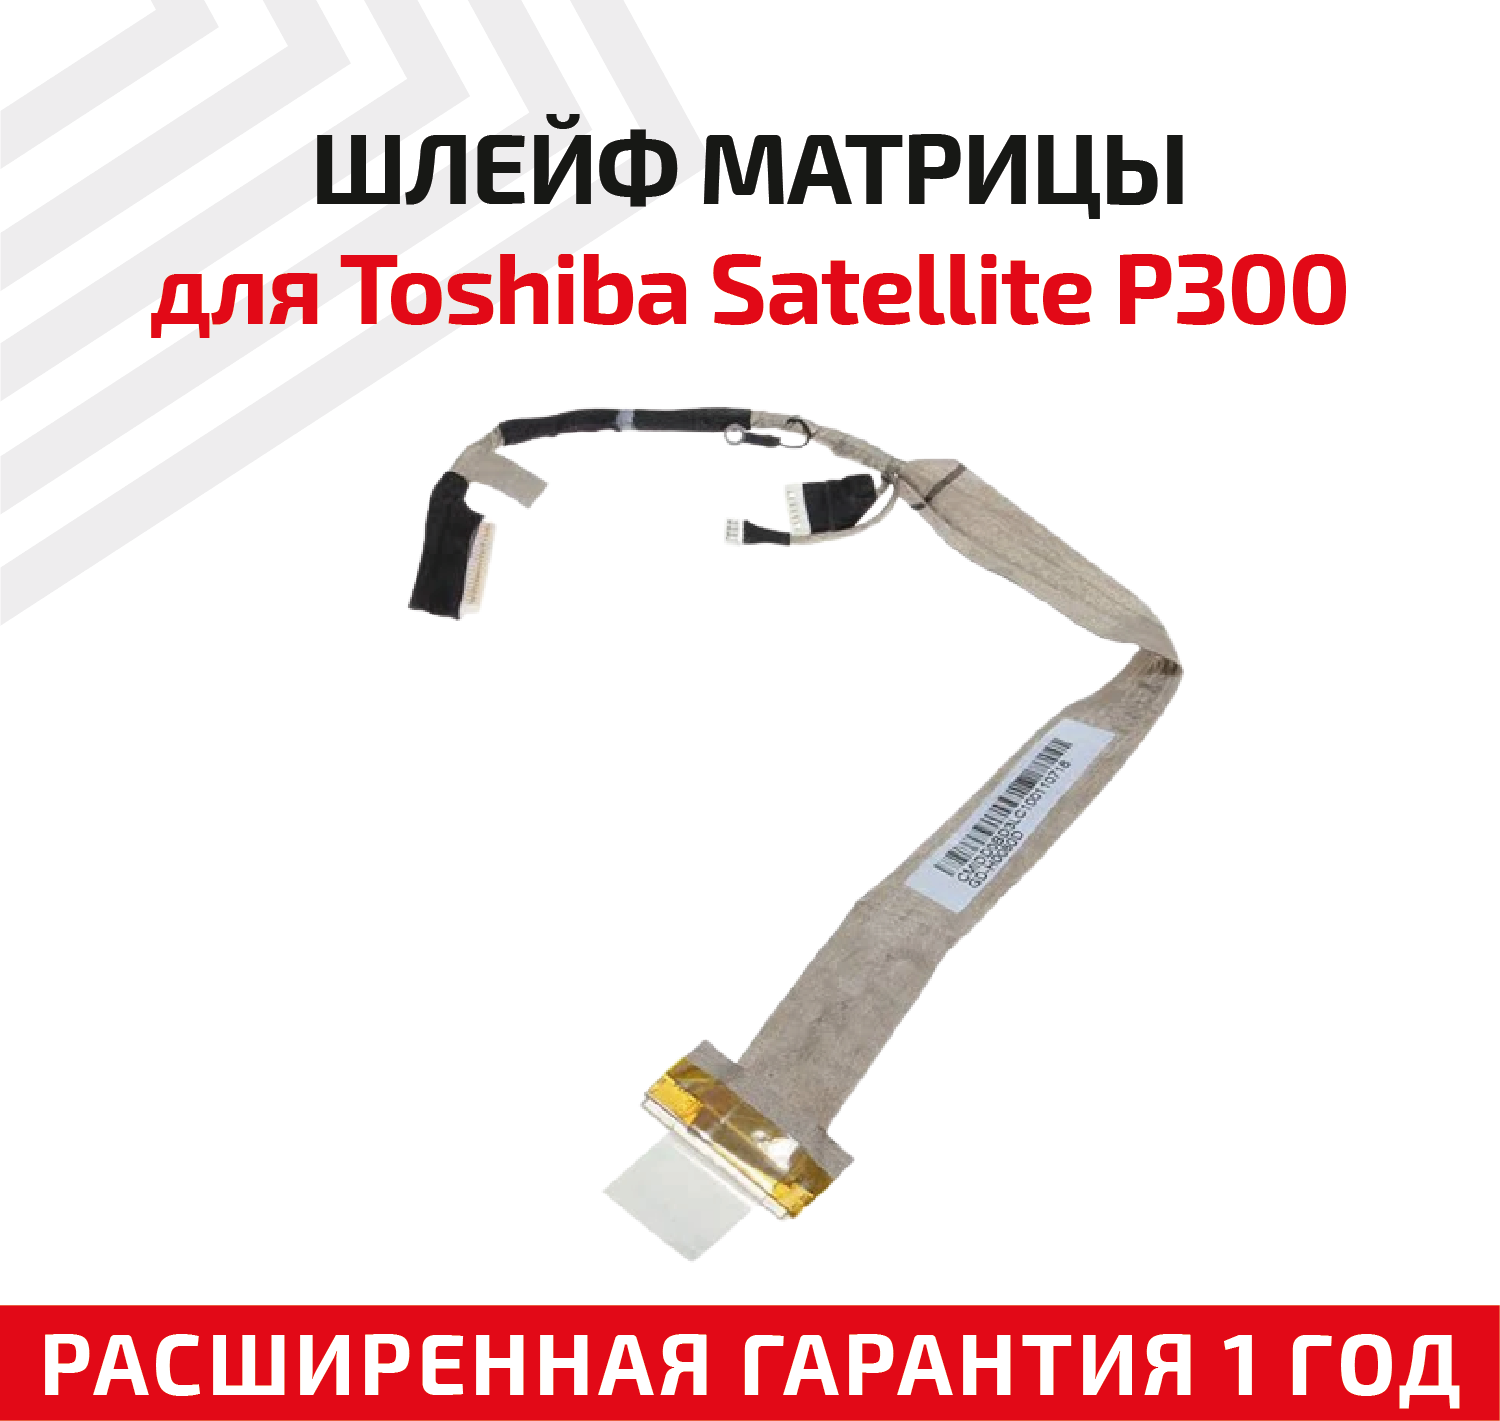 Шлейф матрицы для ноутбука Toshiba Satellite P300 7400305